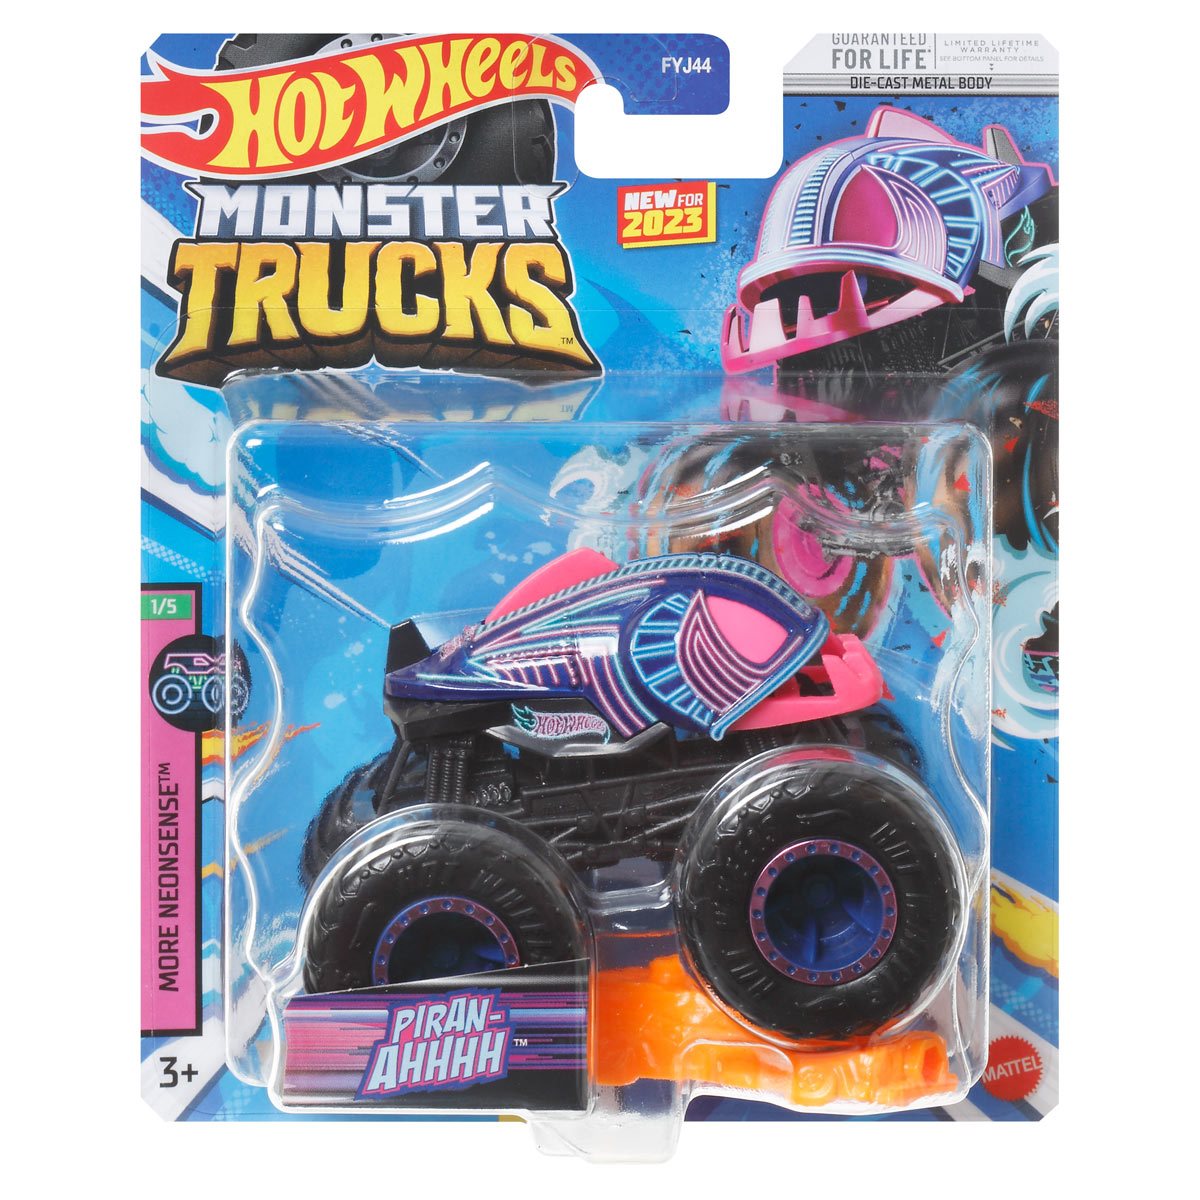 1:64 Monster Trucks Mix monster 2 Vehicle Hot Case Wheels wheels 8, of truck Scale 2023 hot